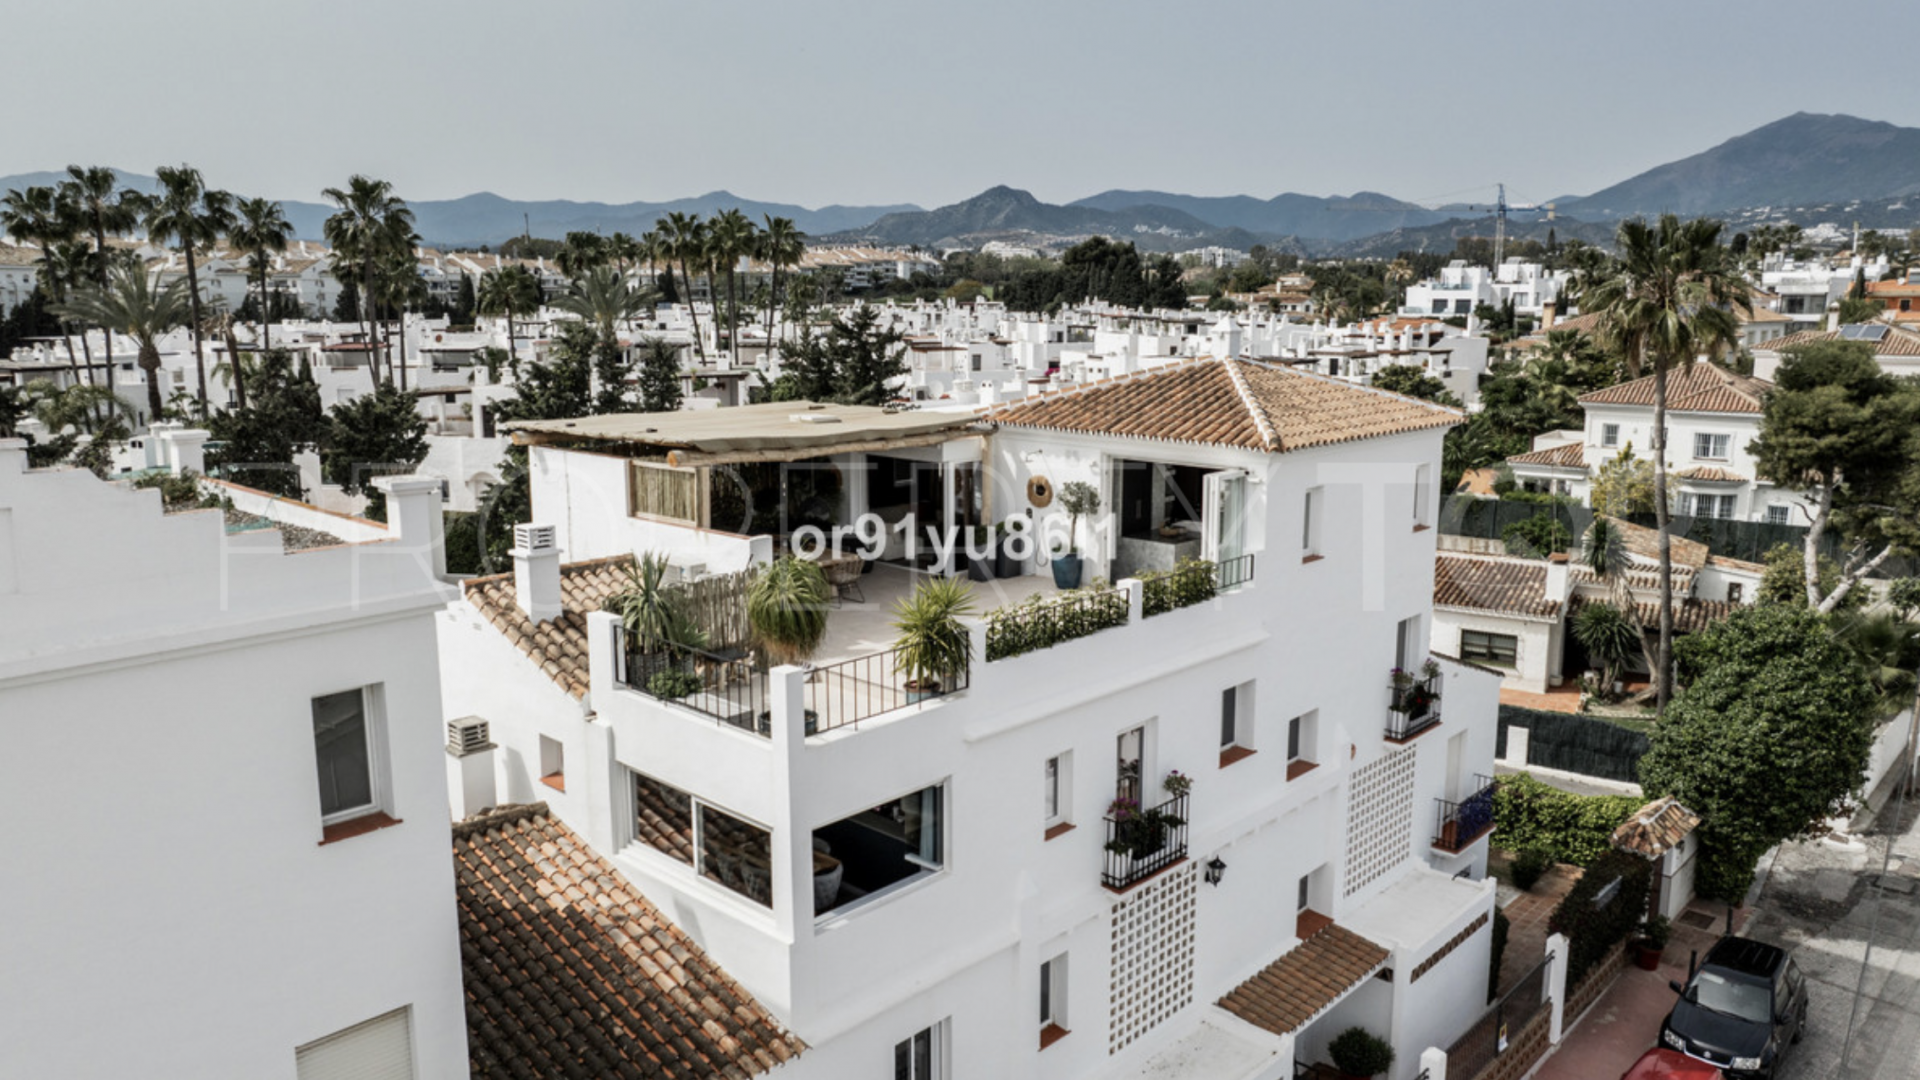 For sale duplex penthouse in San Pedro de Alcantara with 4 bedrooms